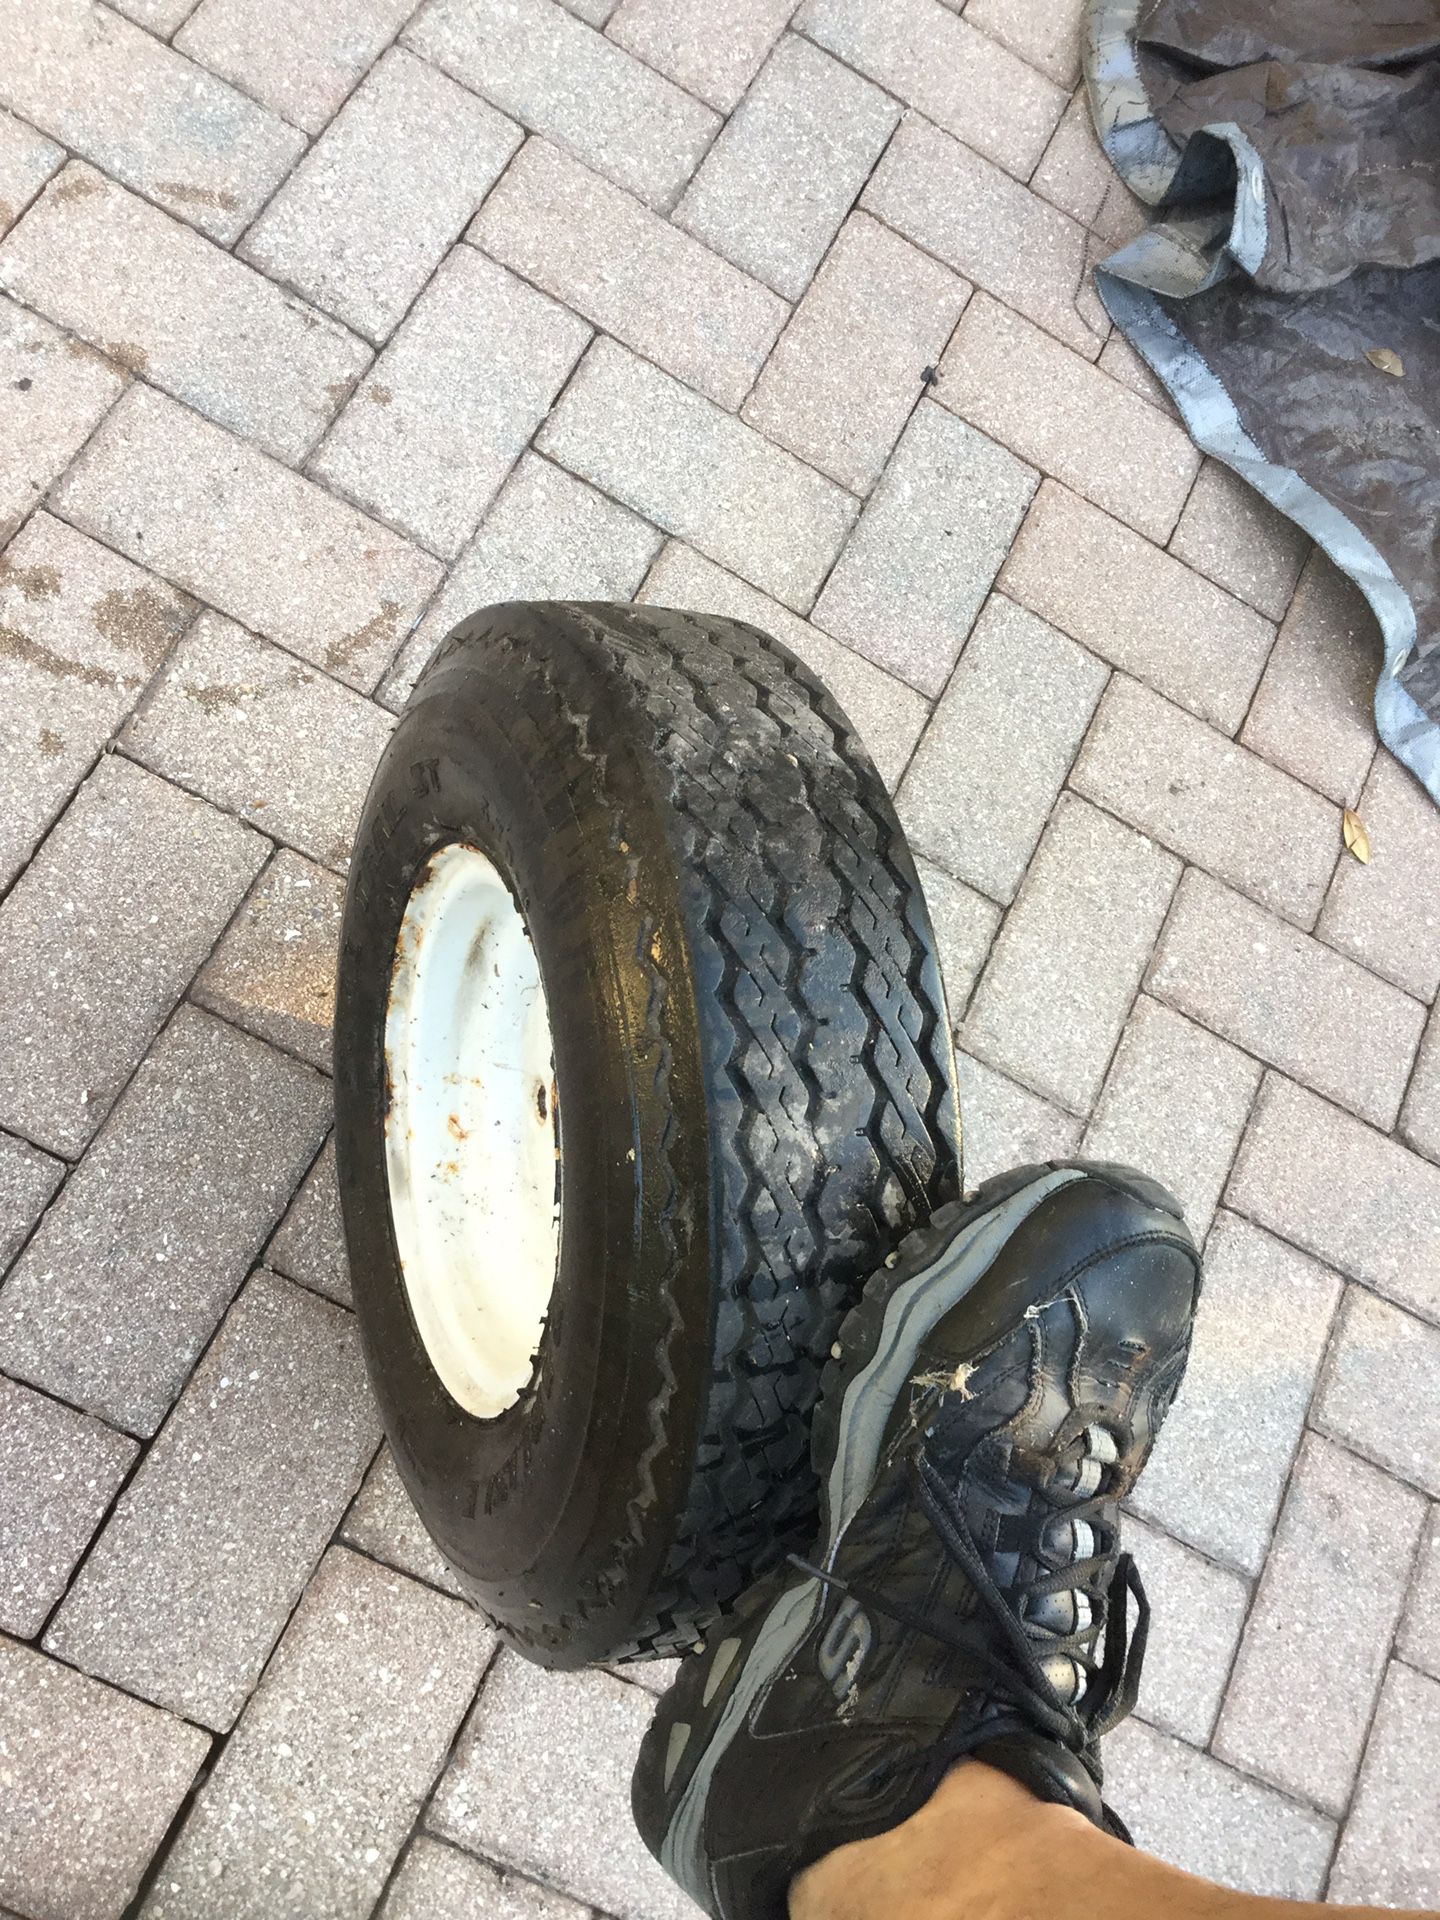 Trailer tire with rim